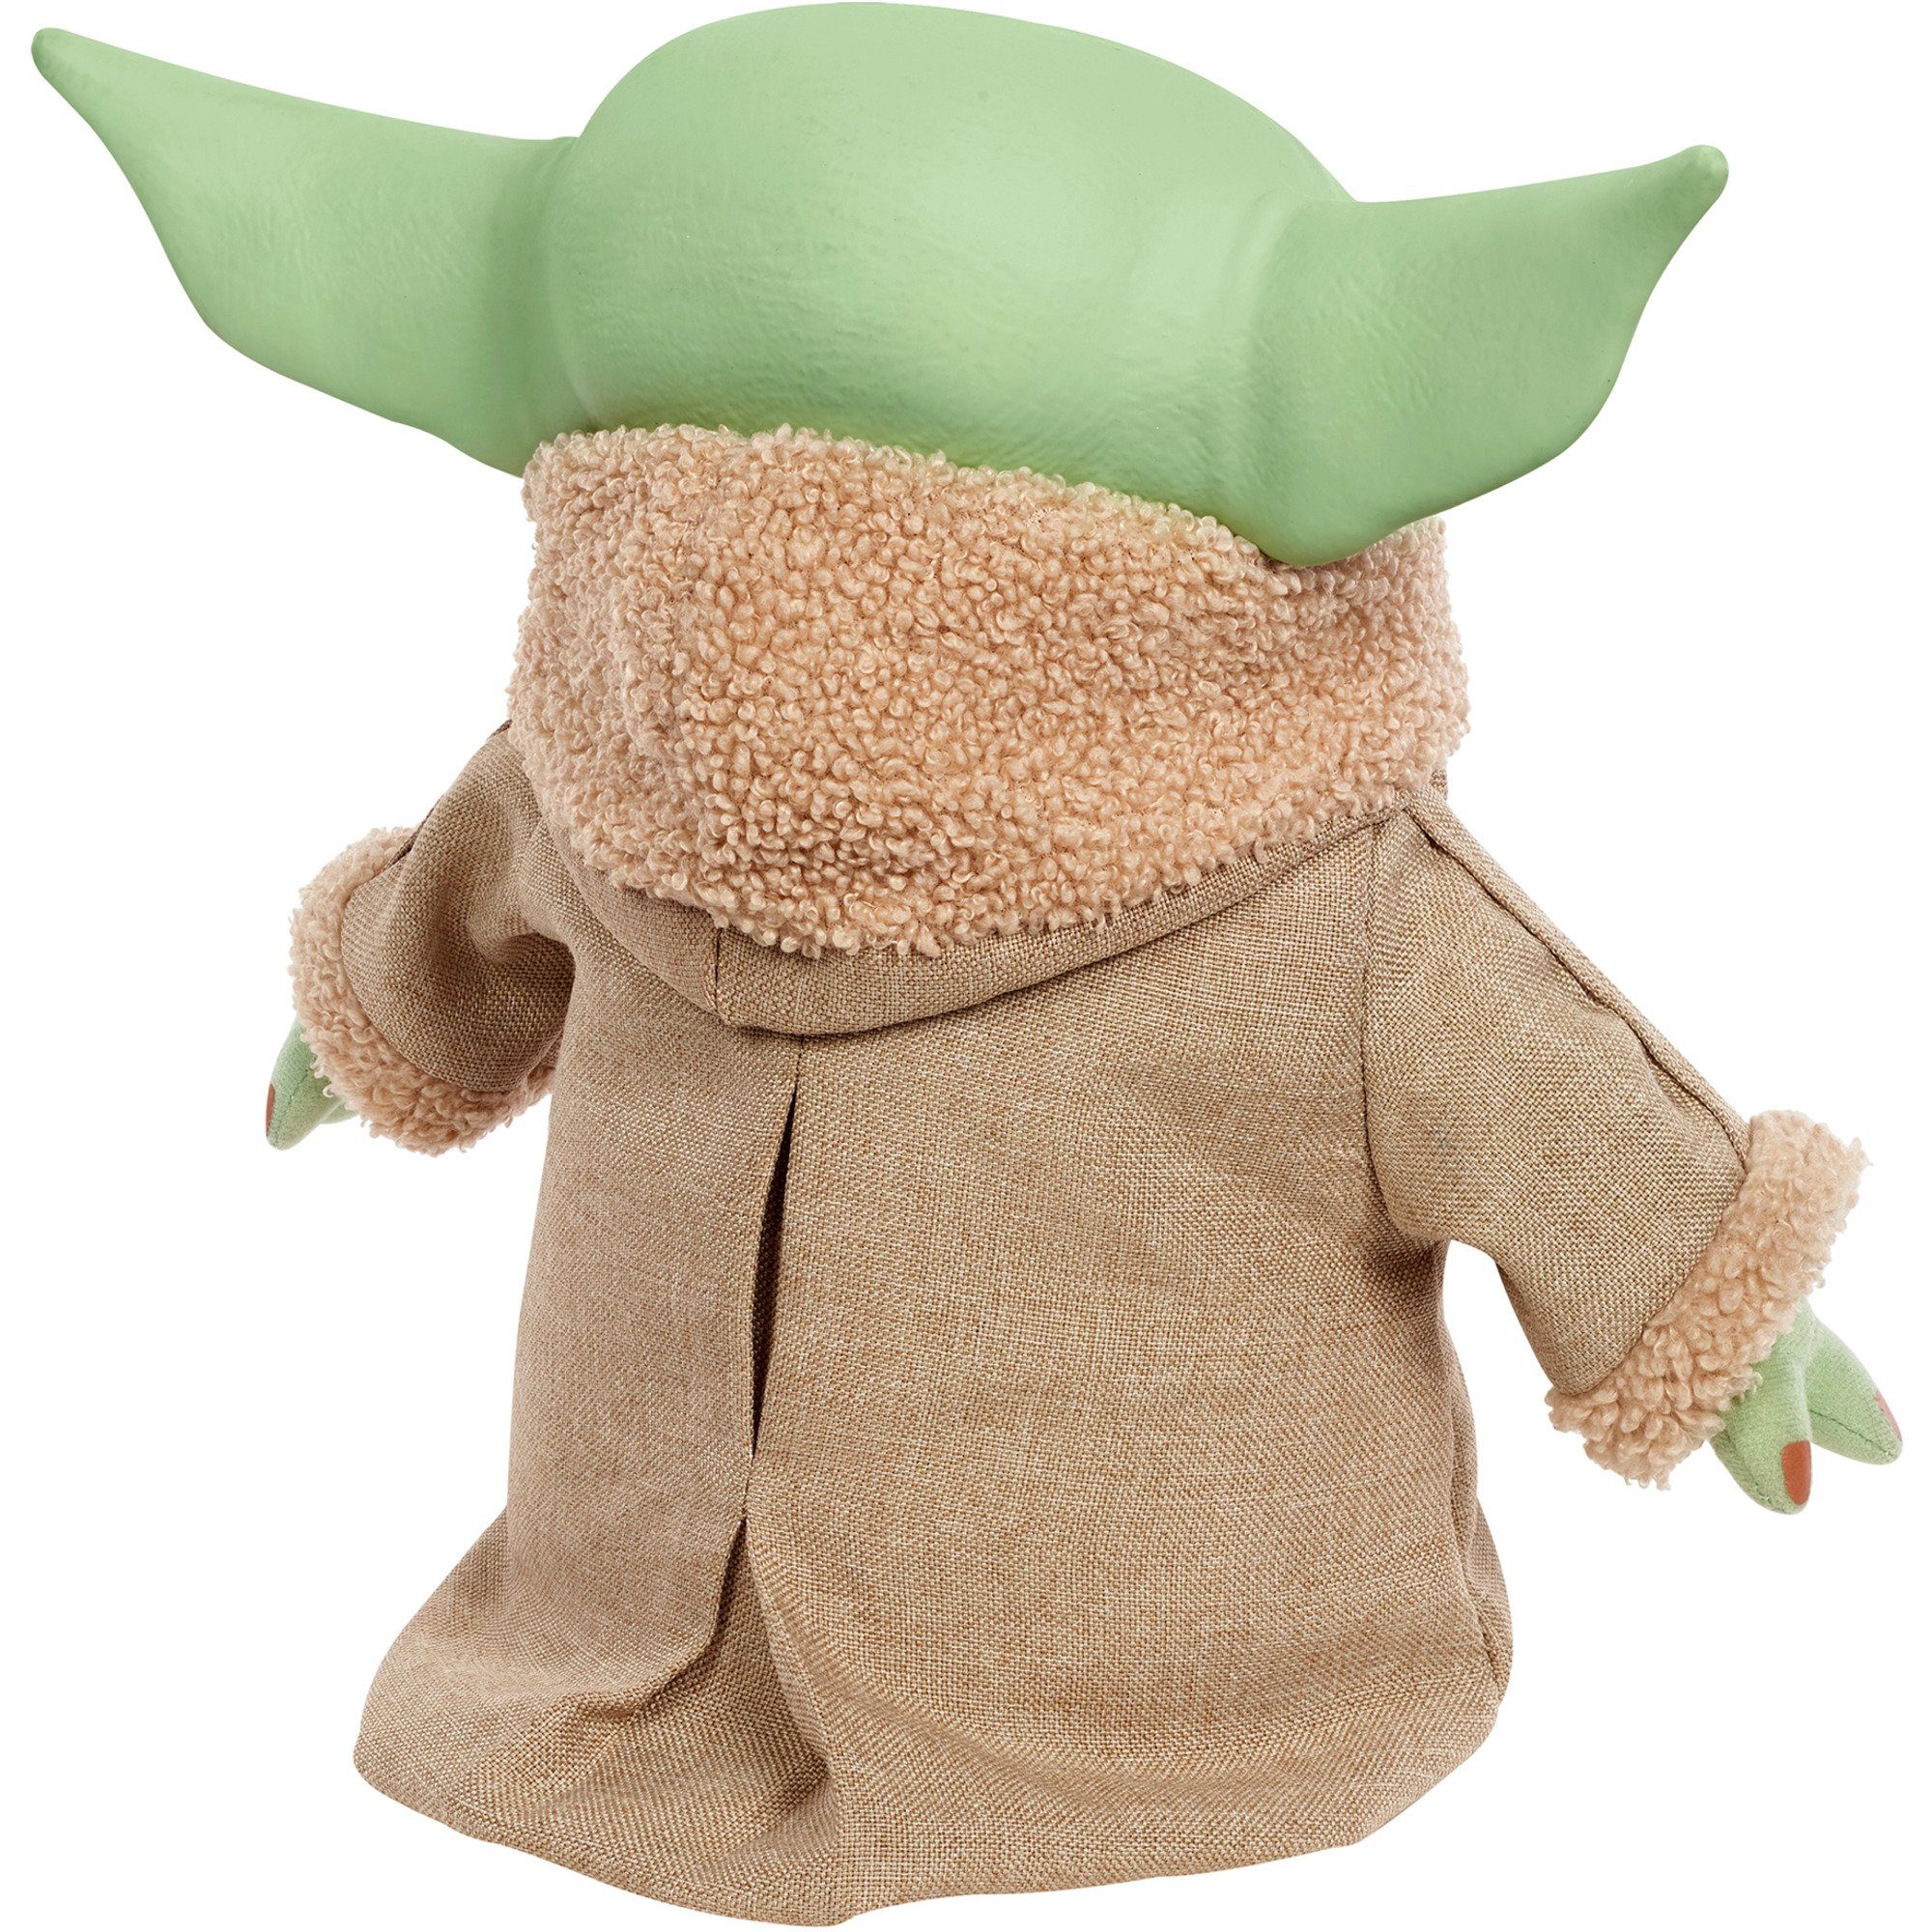 Star Wars The Mandalorian Kuscheltier Baby Yoda Grogu The Child 25